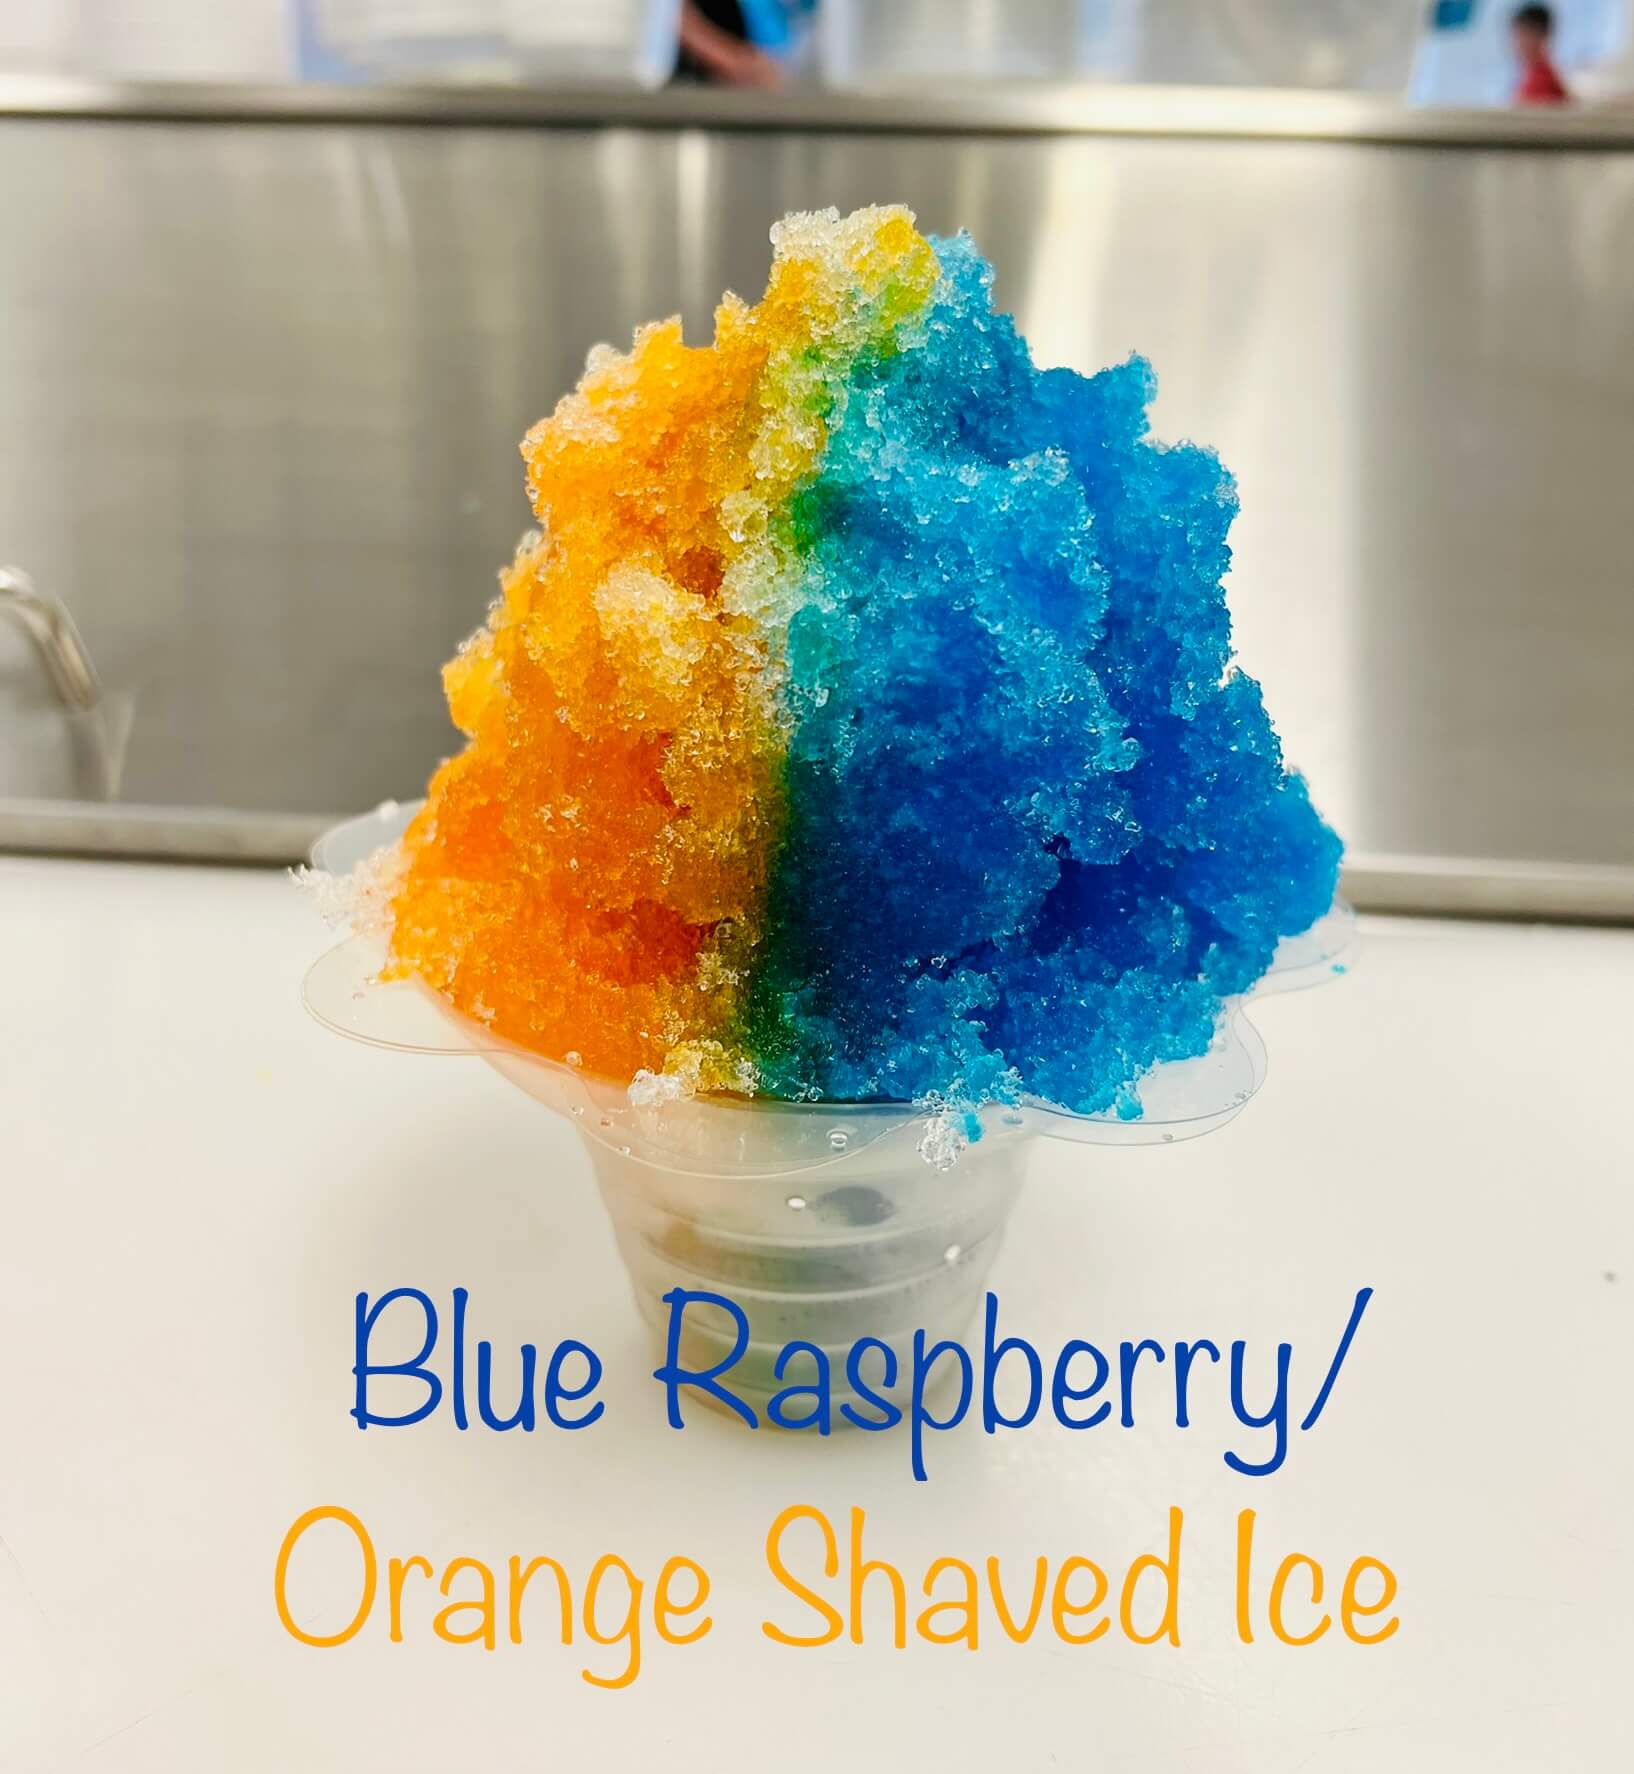 Blue raspberry orange shaved ice